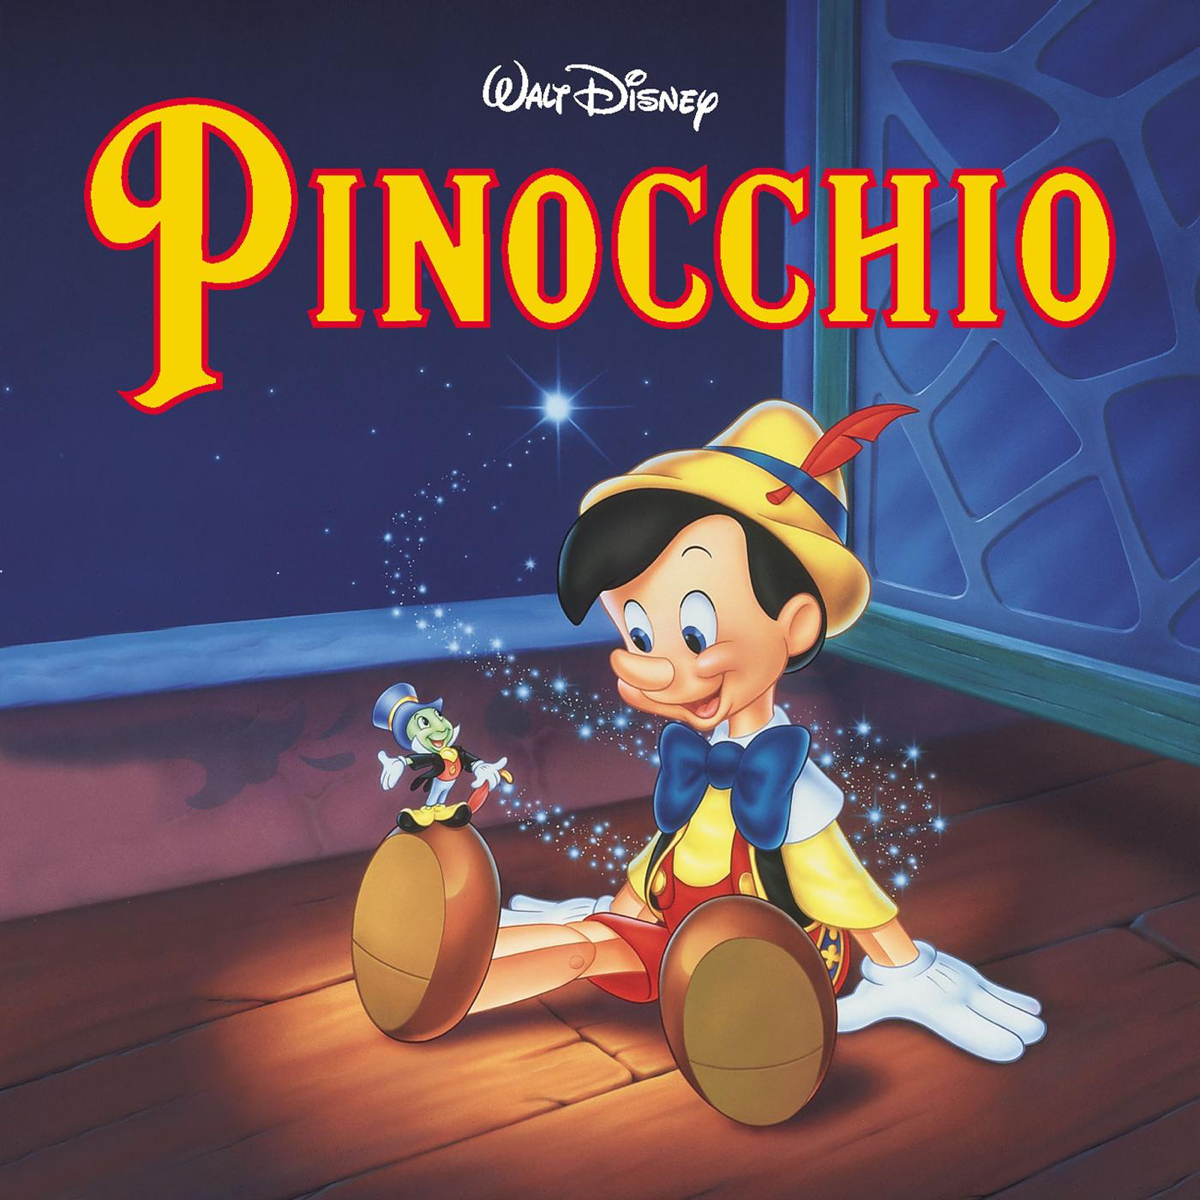 Pinocchio - Wikipedia